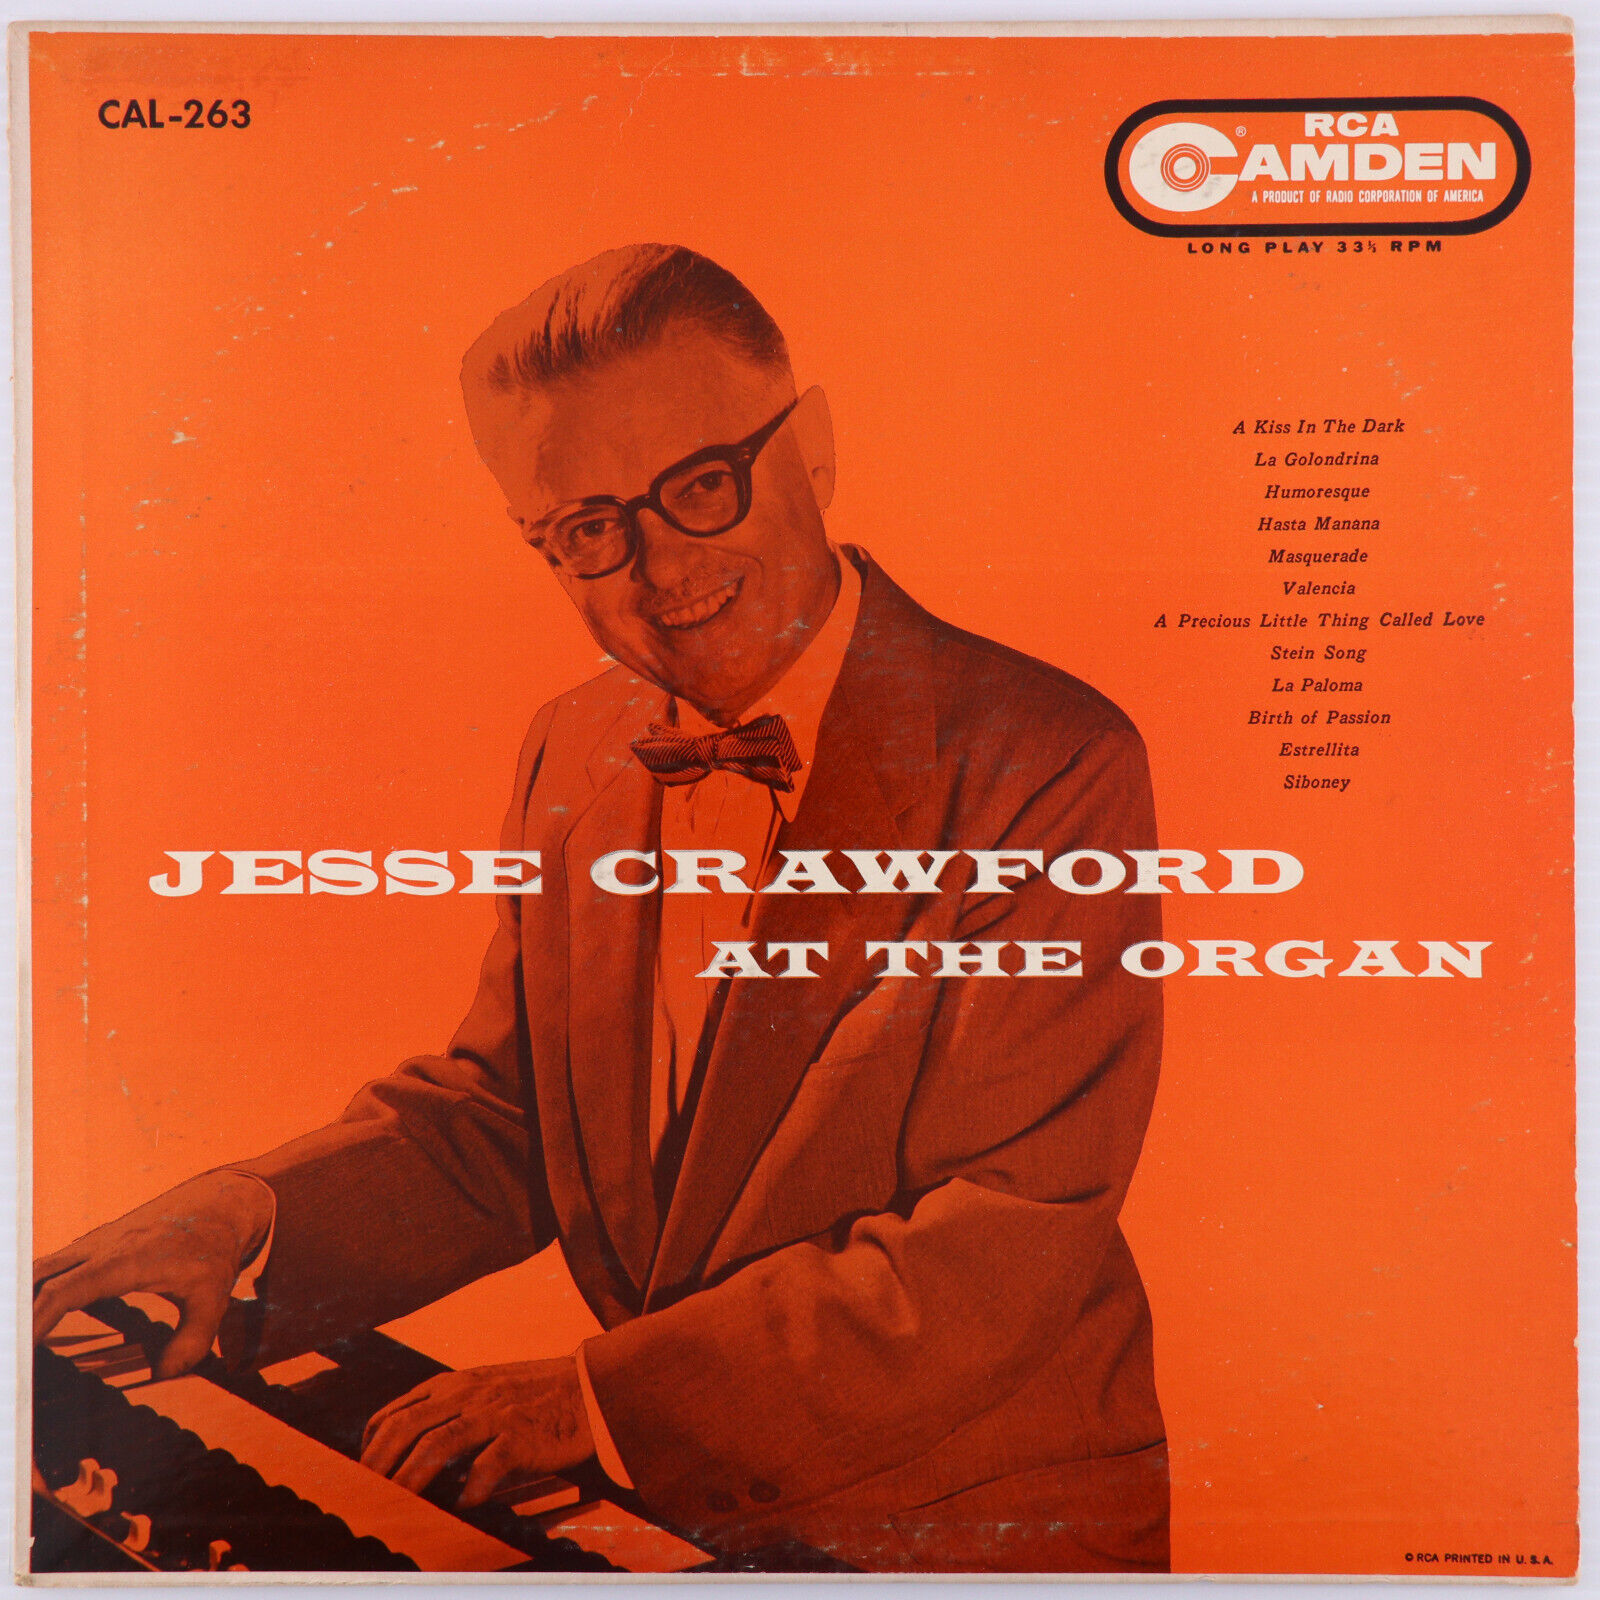 Jesse Crawford – At The Organ - Mono LP RCA Camden – CAL 263